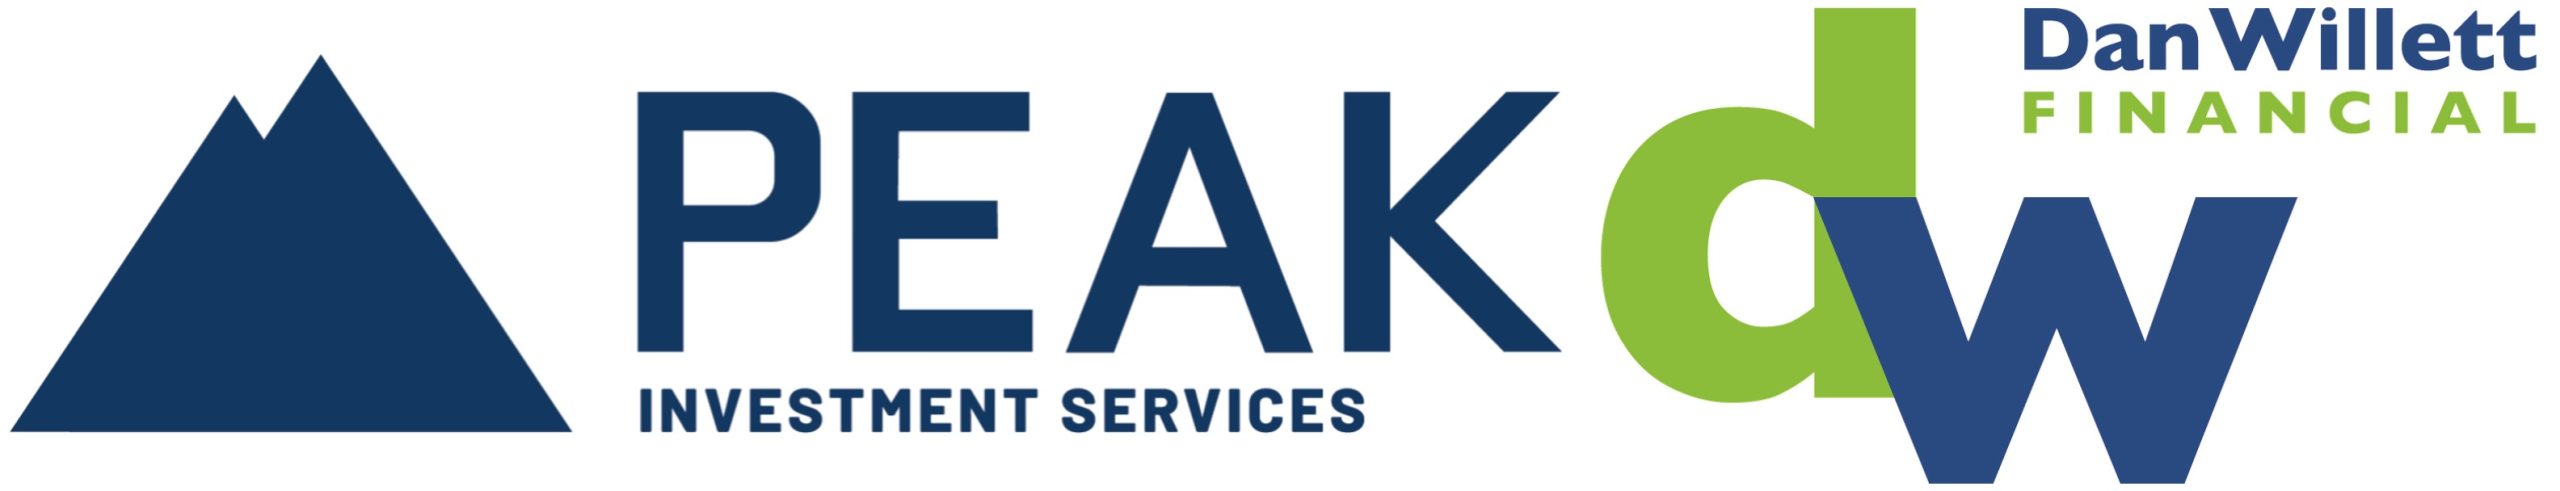 Peak Investment Services, Dan Willett Financial Logo